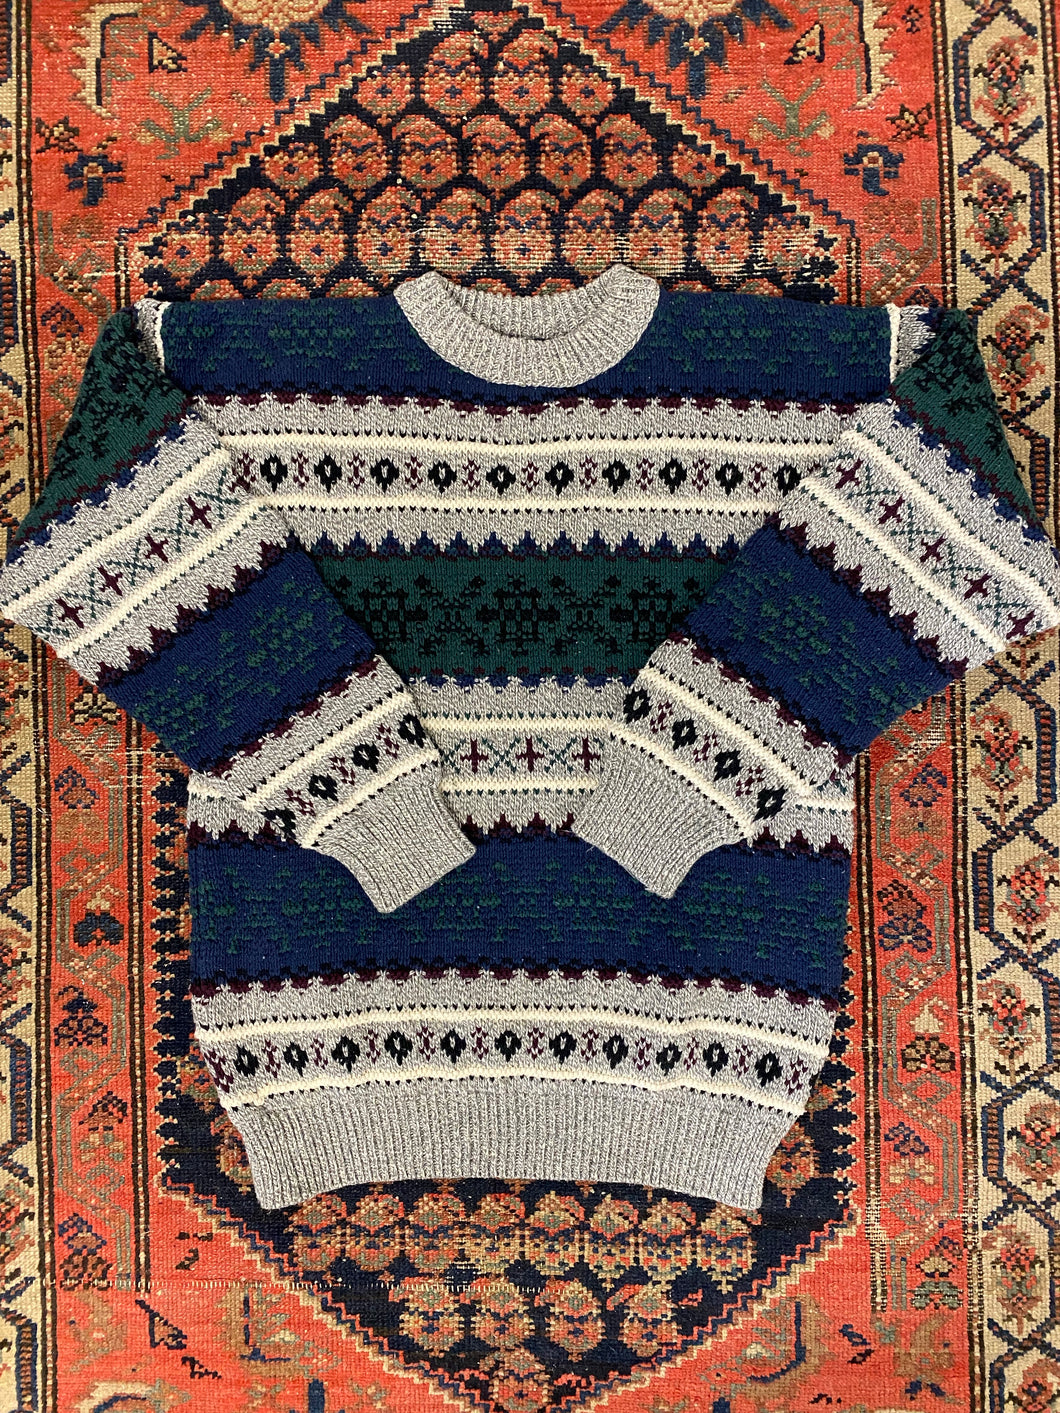 Vintage Patterned Knit Sweater - L